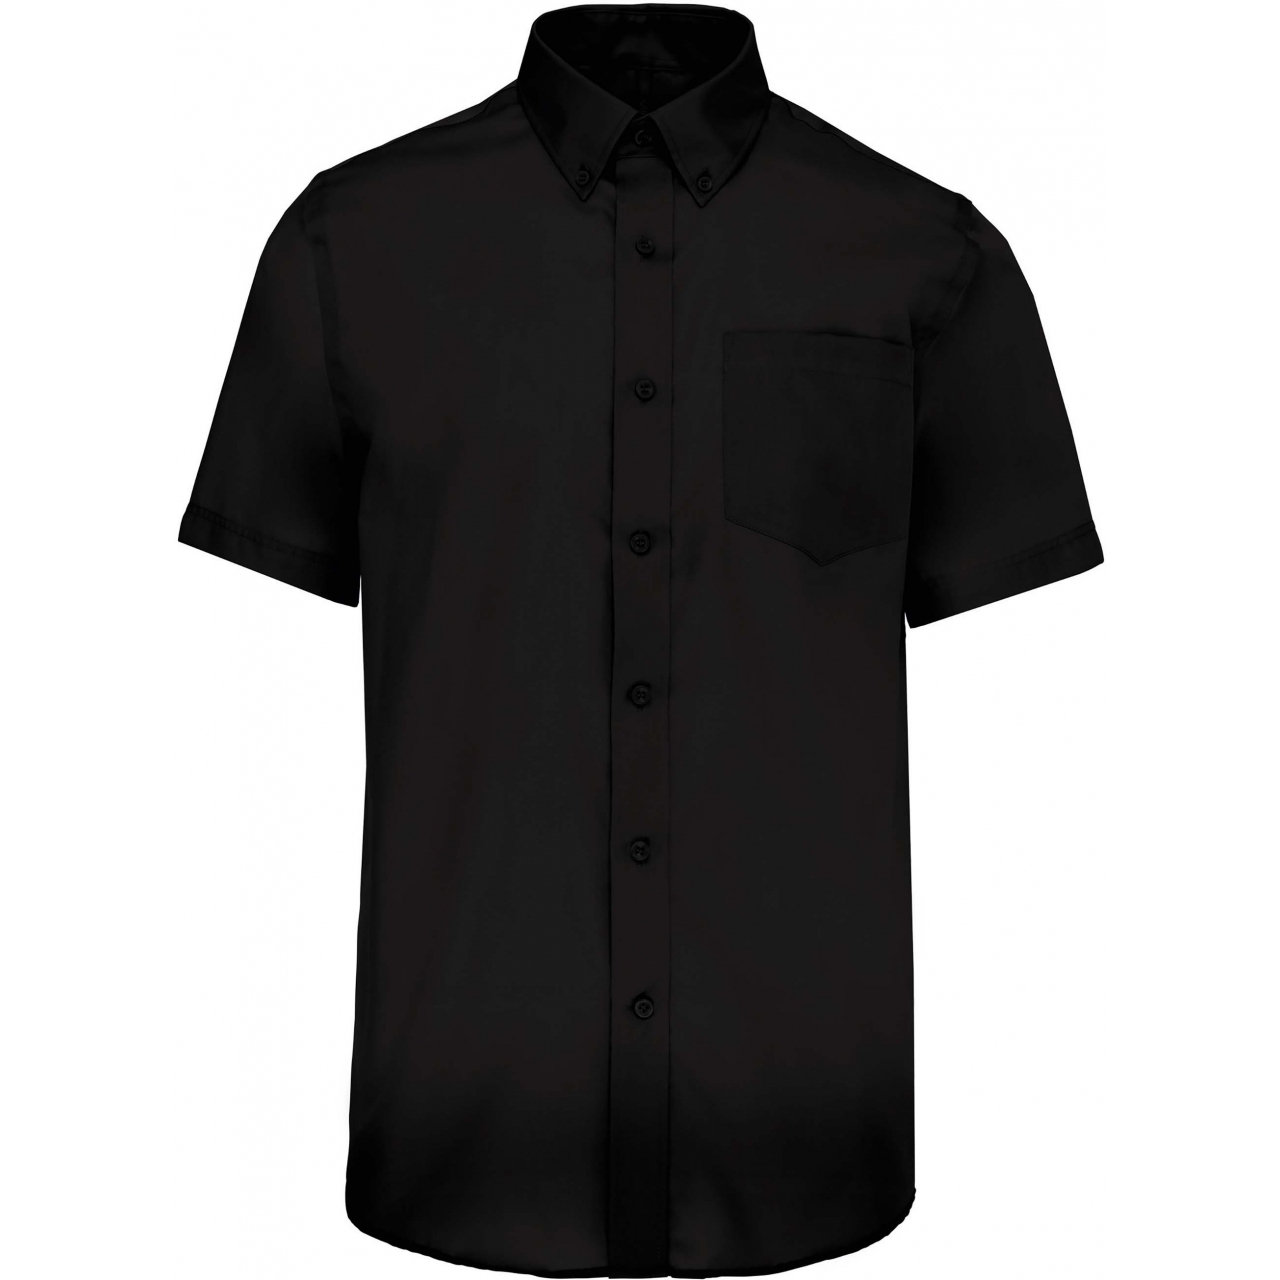 Pánská košile s krátkým rukávem Kariban Premium - černá, XL